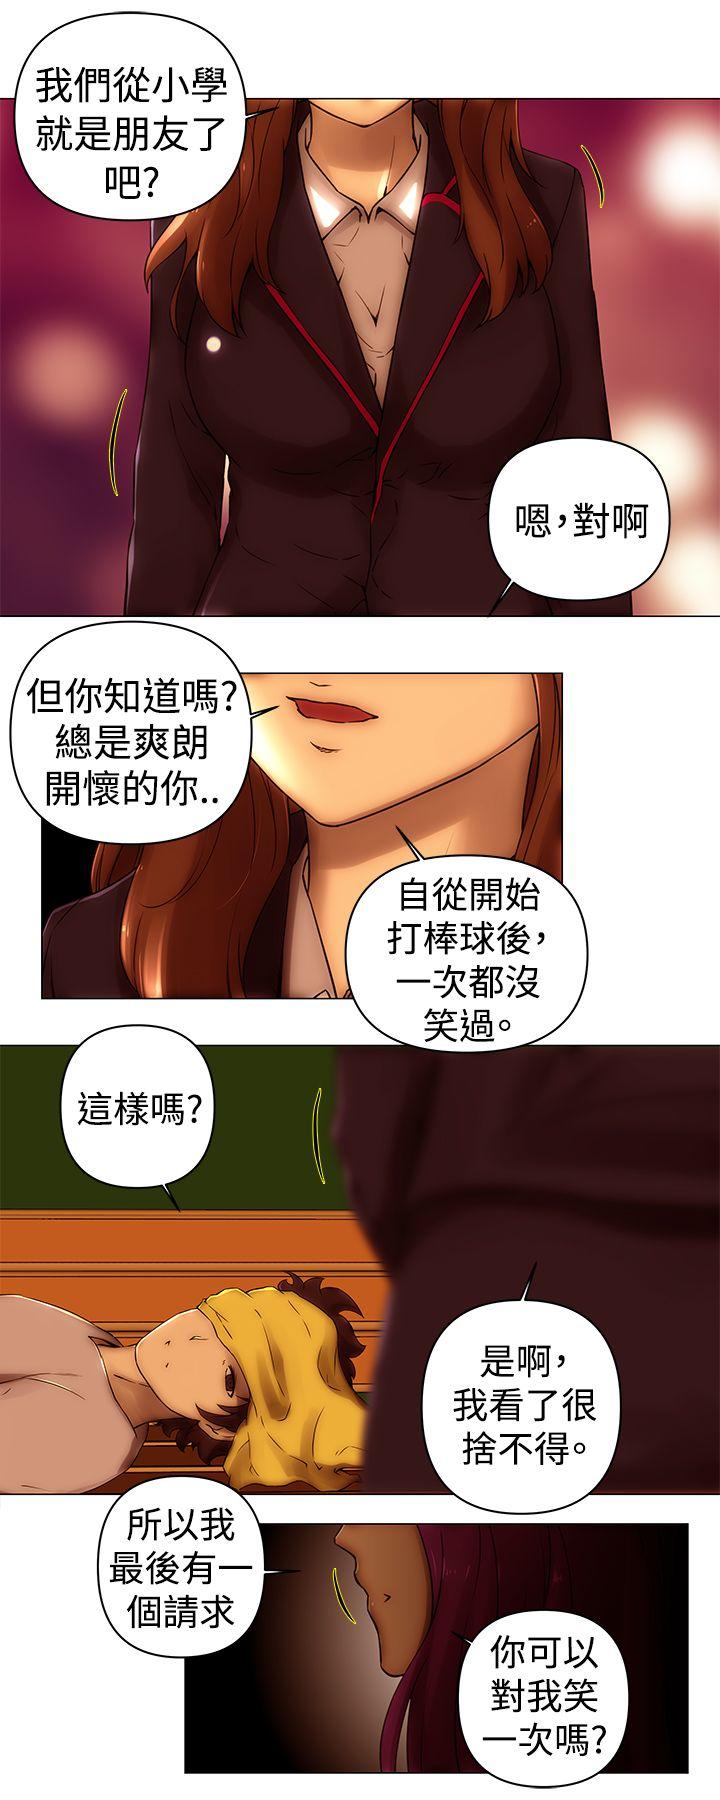 韩国污漫画 Commission 最终话 27